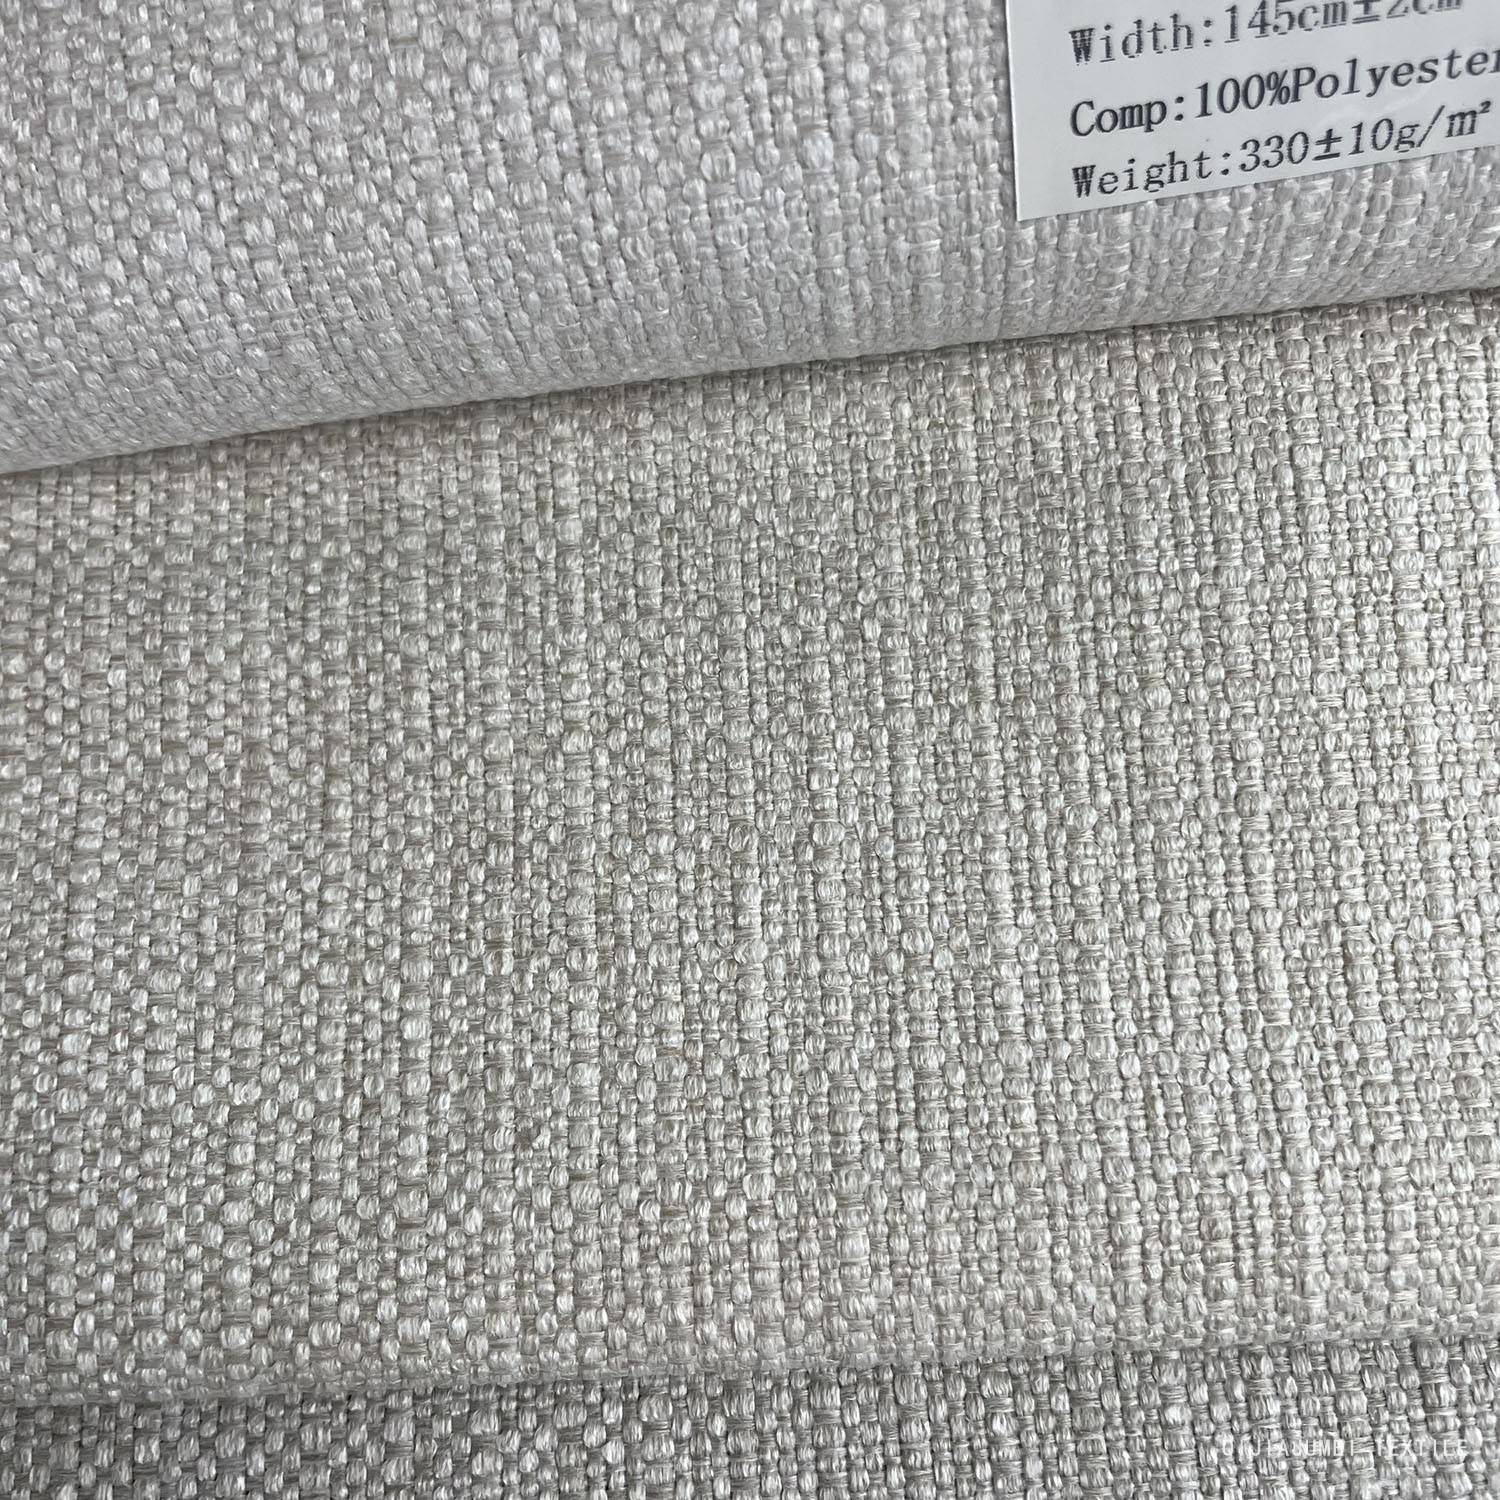 Stock sofa fabric